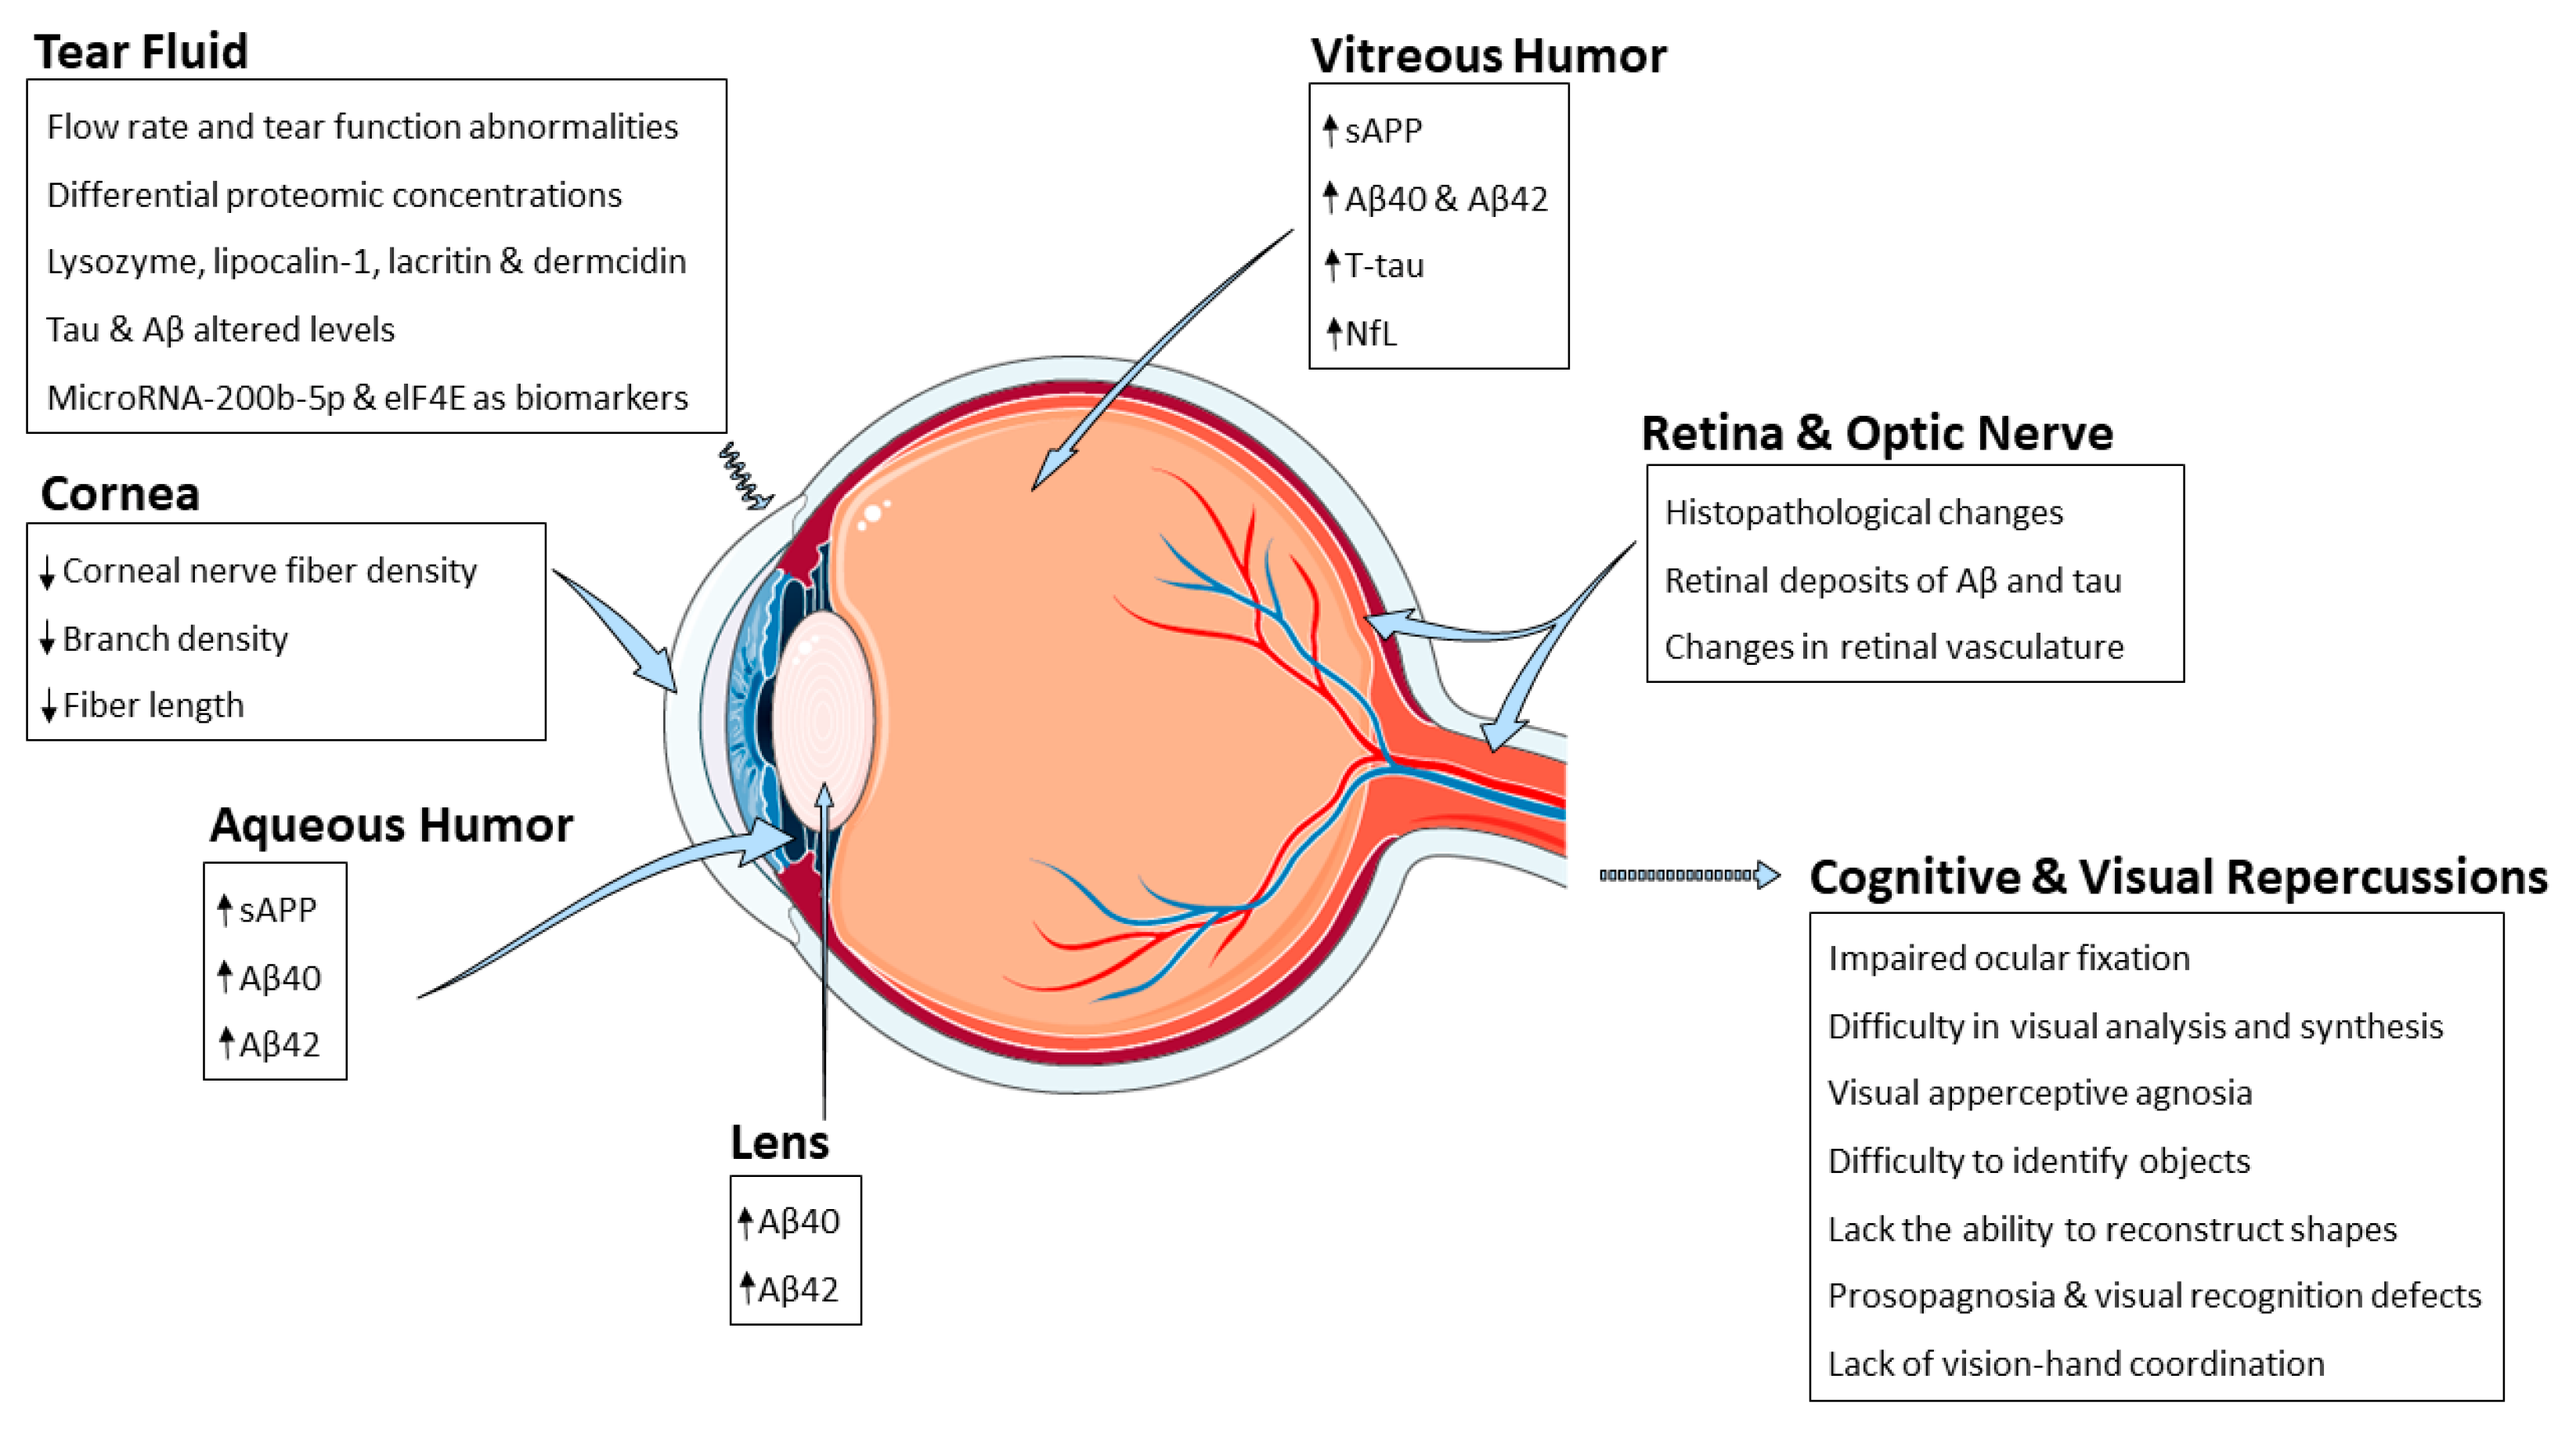 PDF) Integrating Retinal Variables into Graph Visualizing